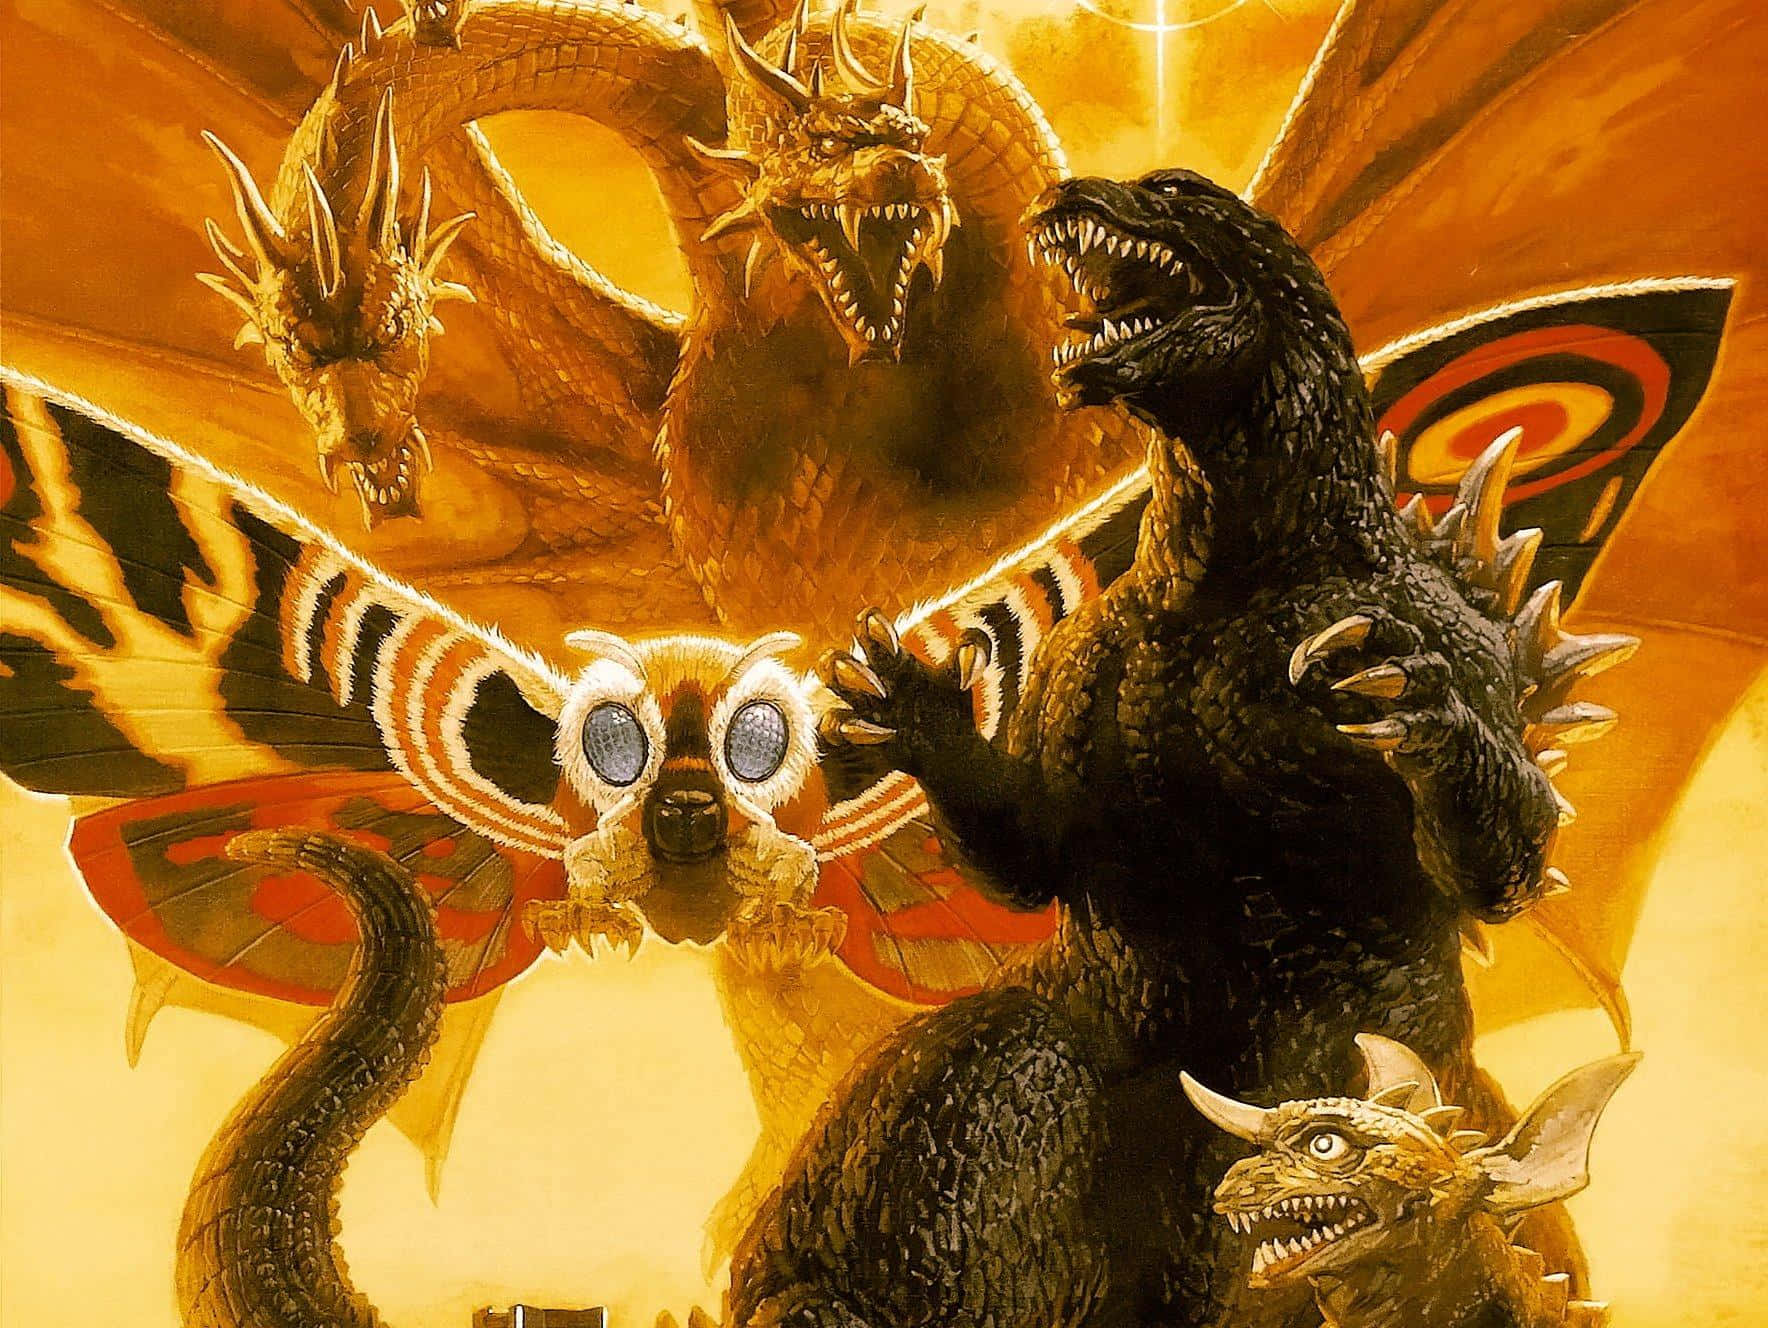 King Ghidorah, the three-headed dragon monster, unleashing terror. Wallpaper